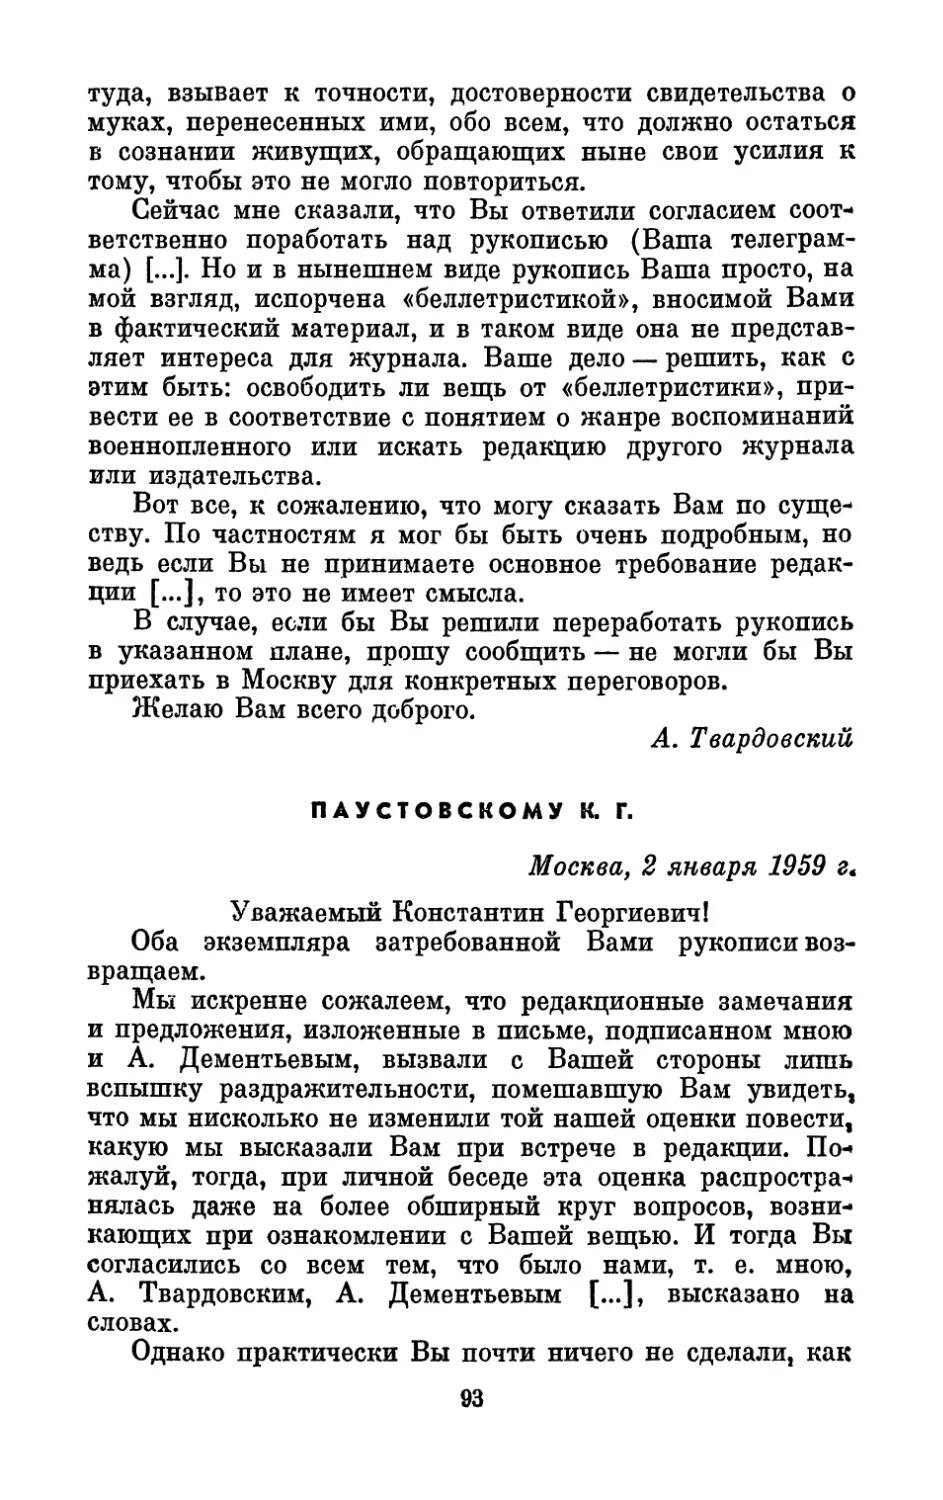 Паустовскому К. Г., 2 января 1959 г.